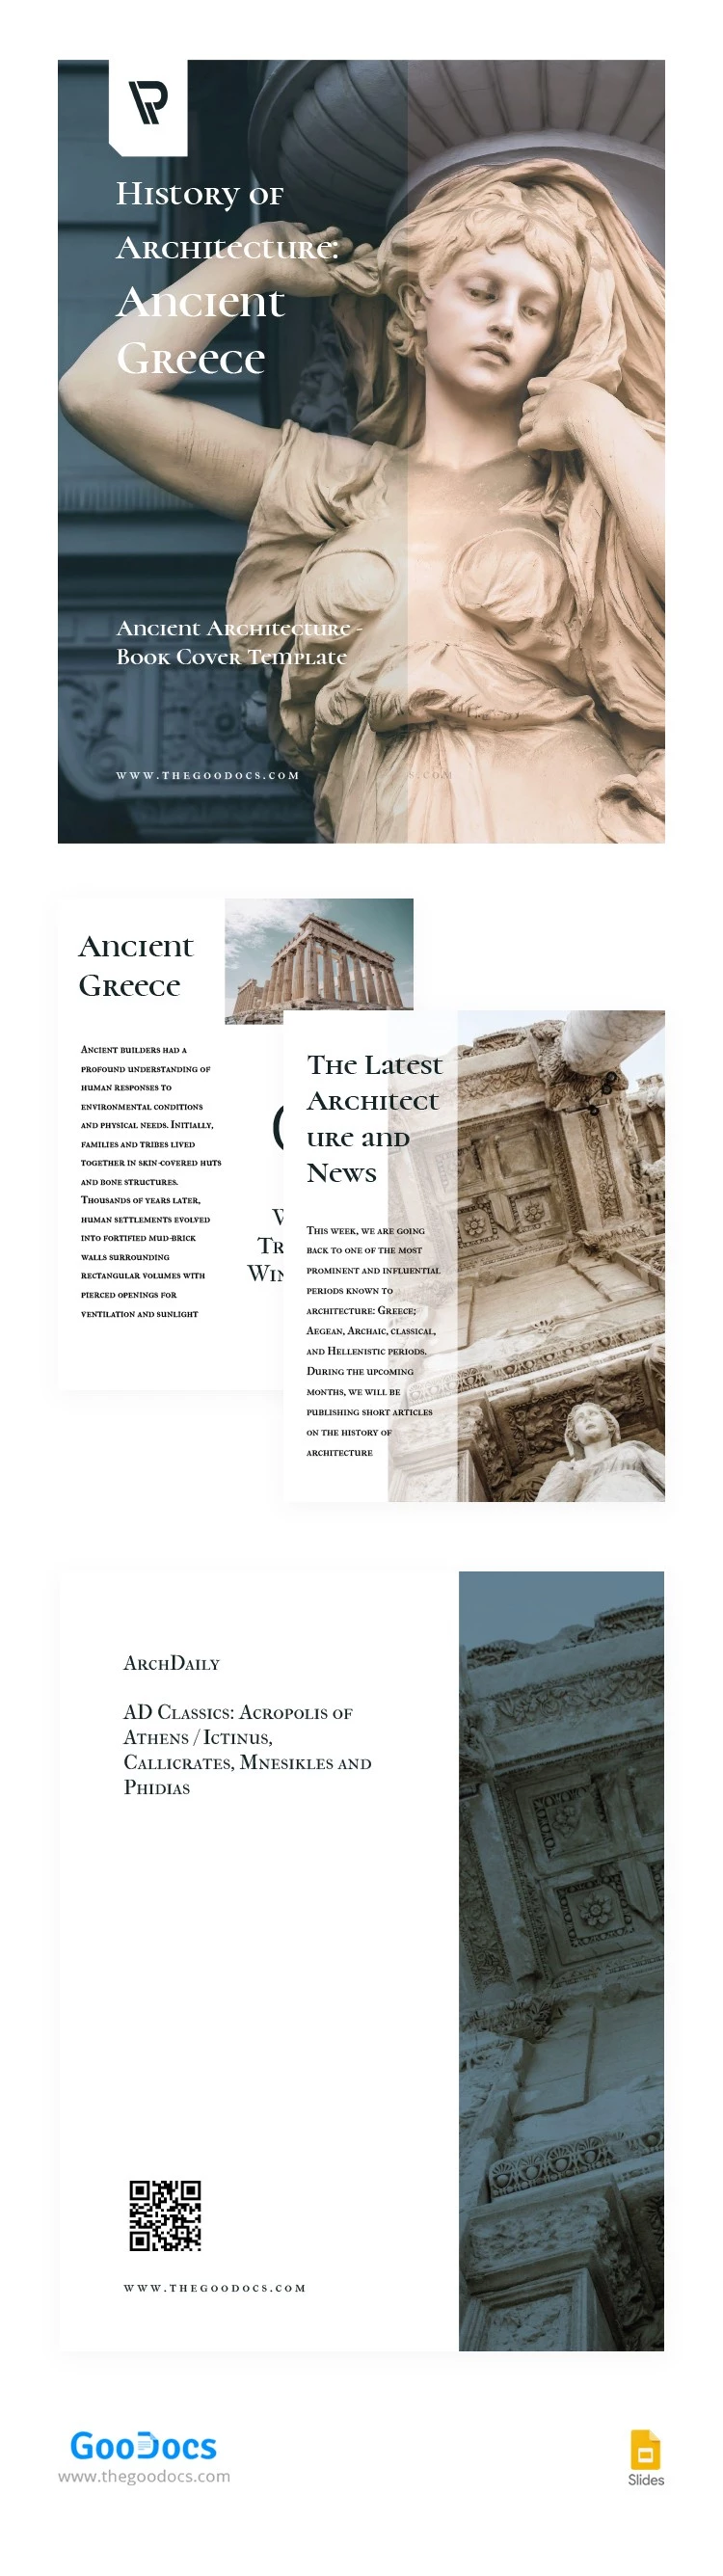 Antikes Architekturbuch - free Google Docs Template - 10062764